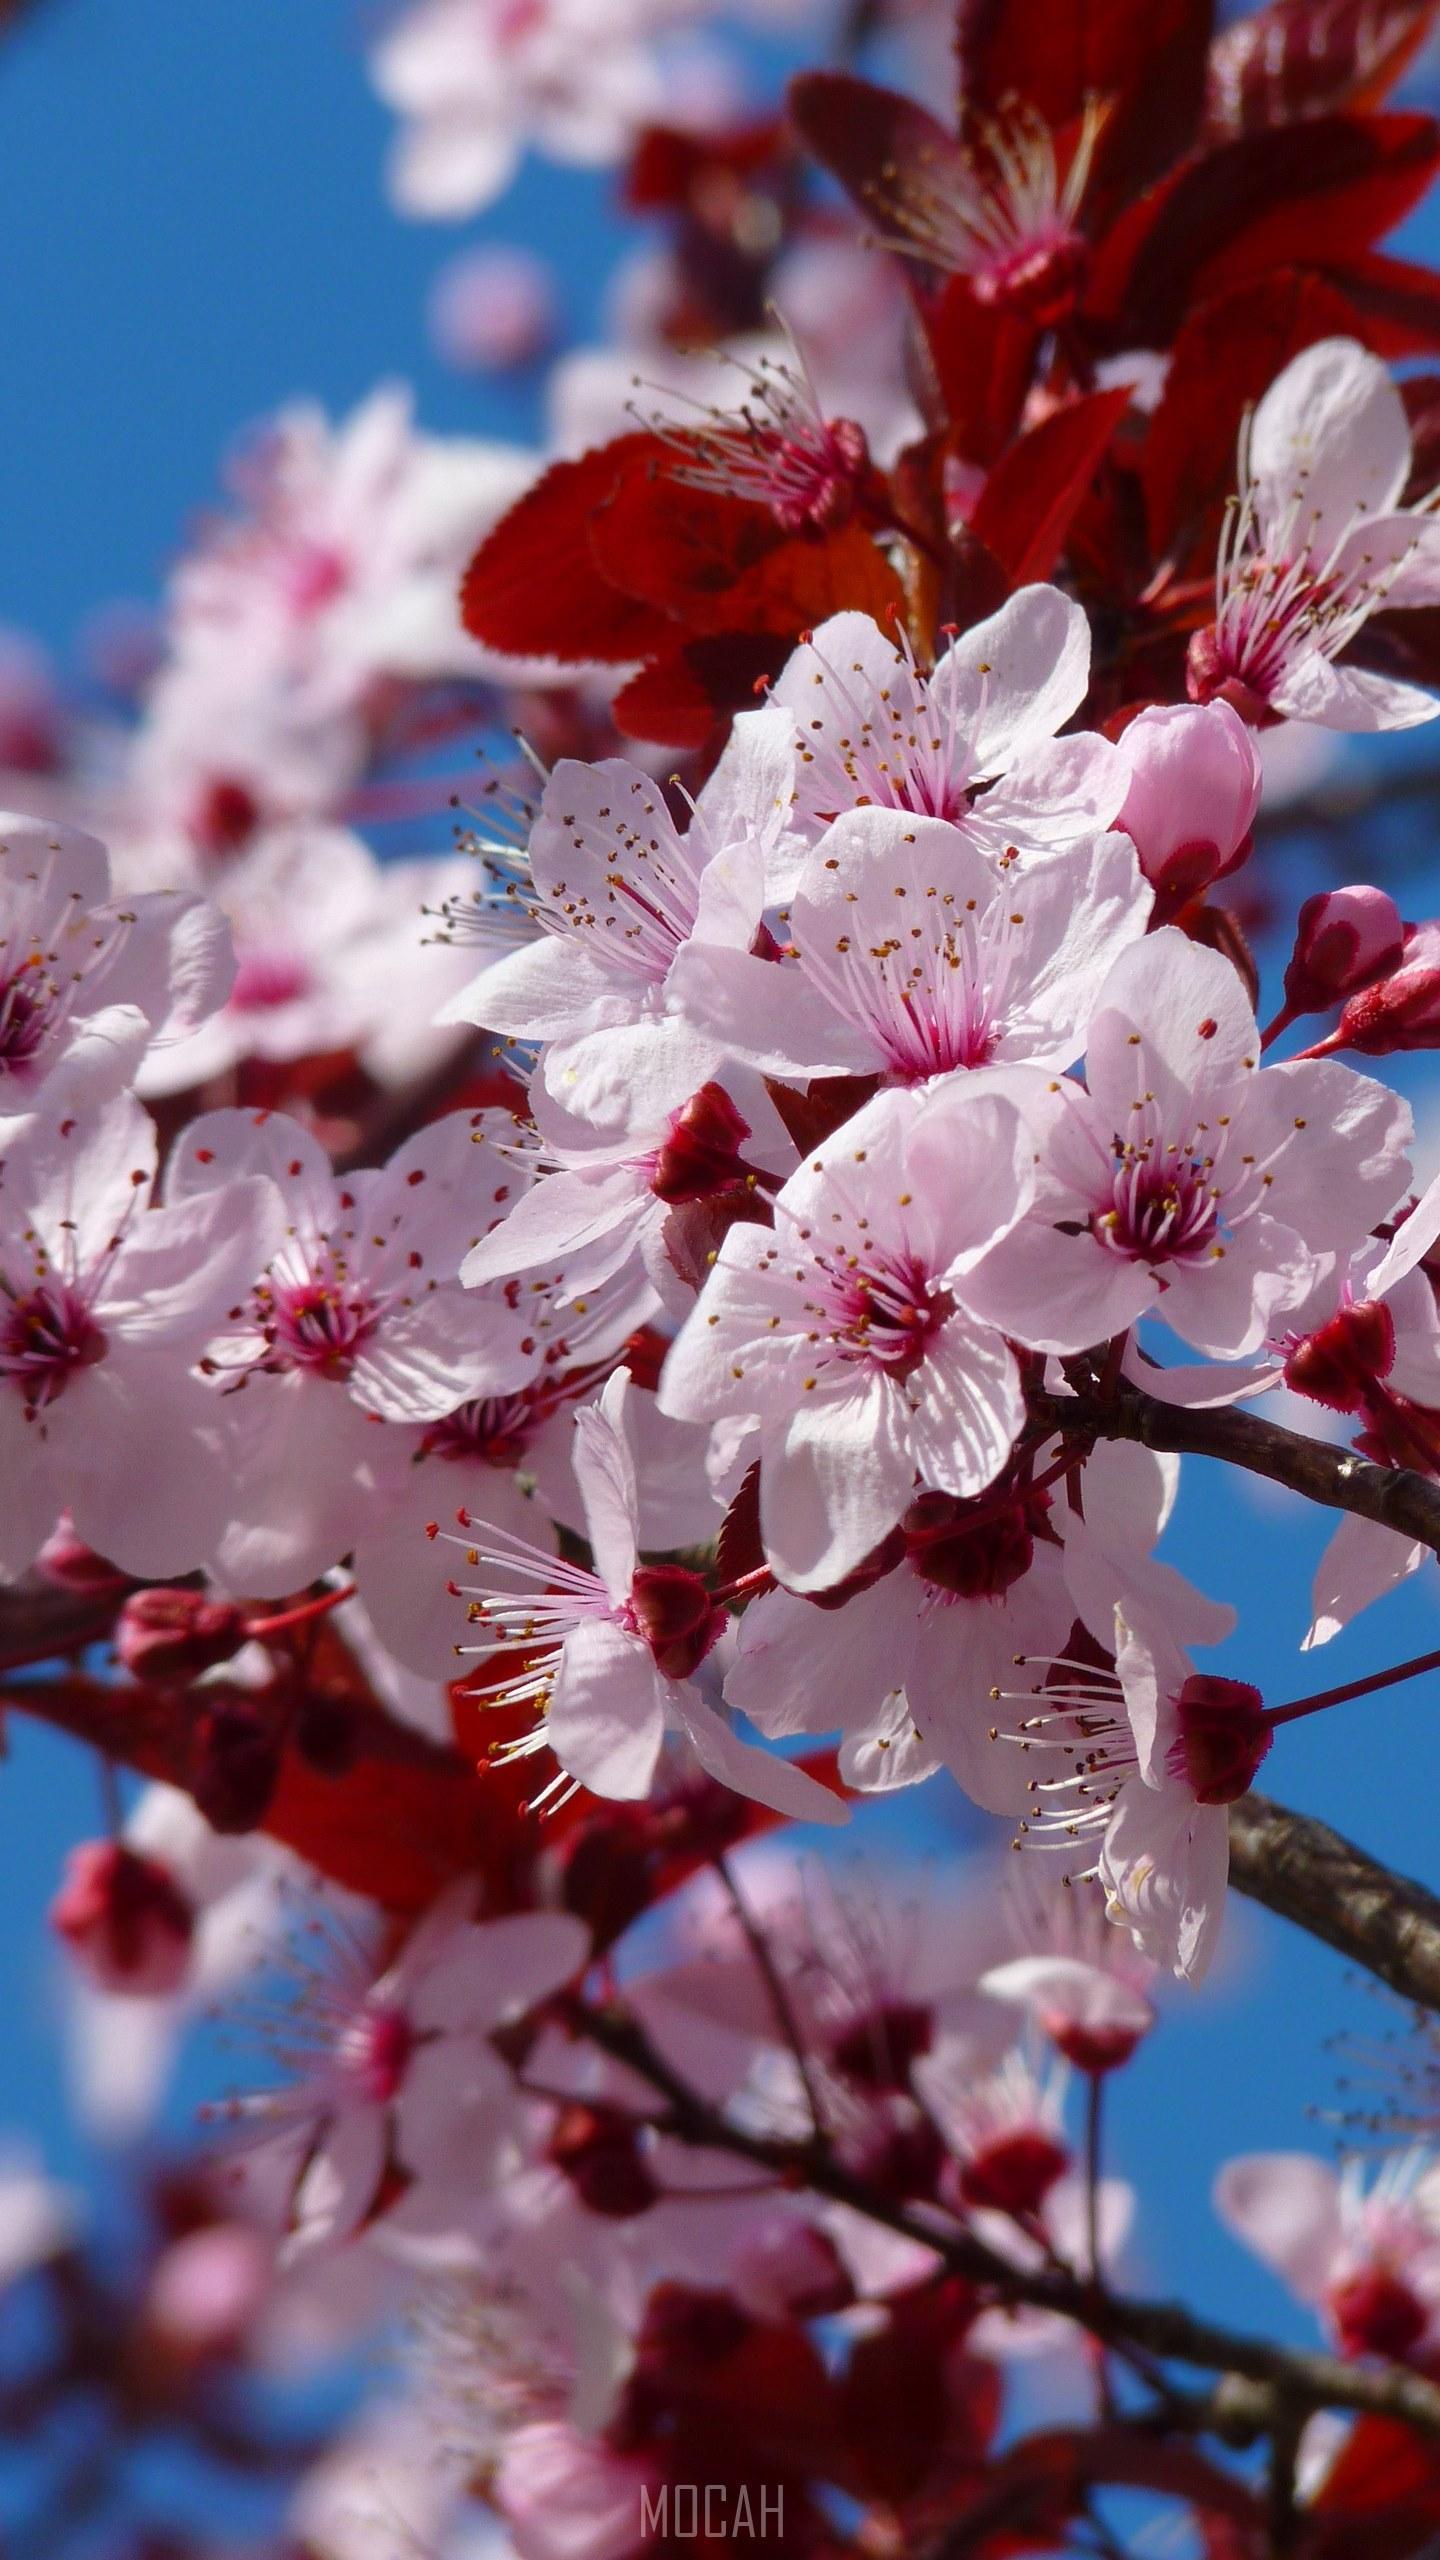 HD wallpaper, 1440X2560, Huawei Honor V10 Wallpaper Free Download, Almond Blossom Cherry Blossom Japanese Cherry Trees